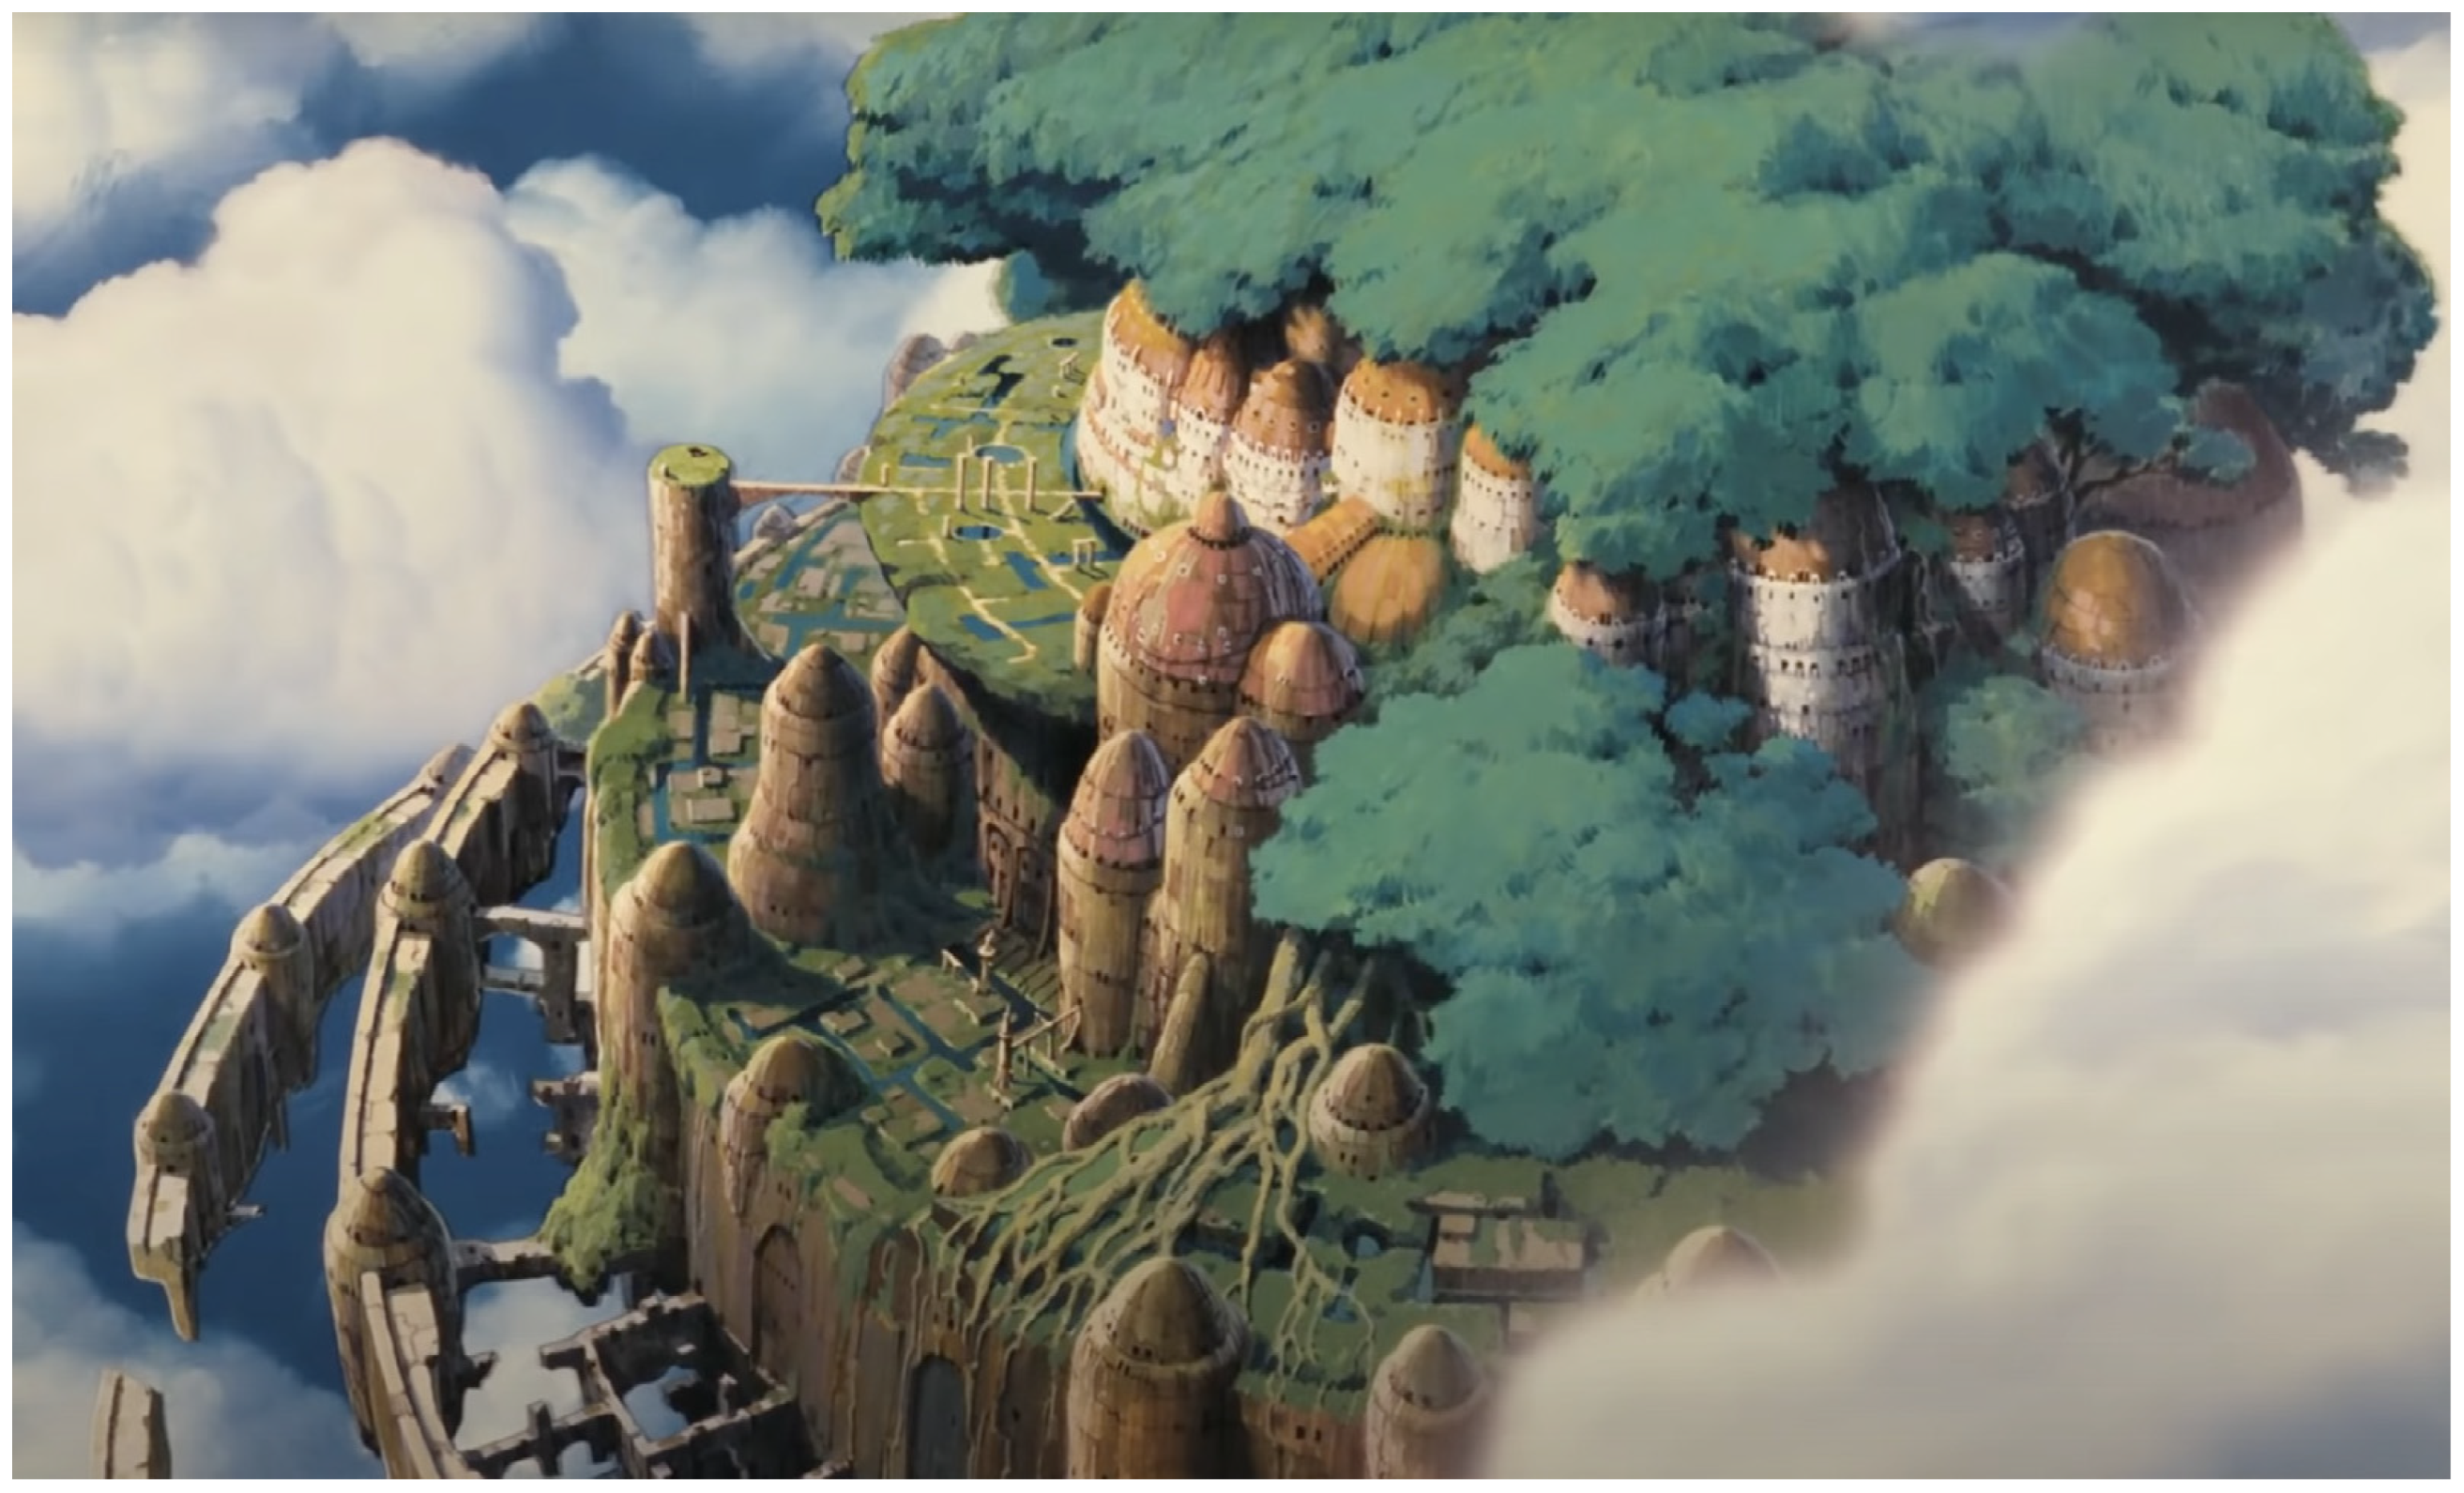 Animating principle: The Wind Rises and the genius of Miyazaki